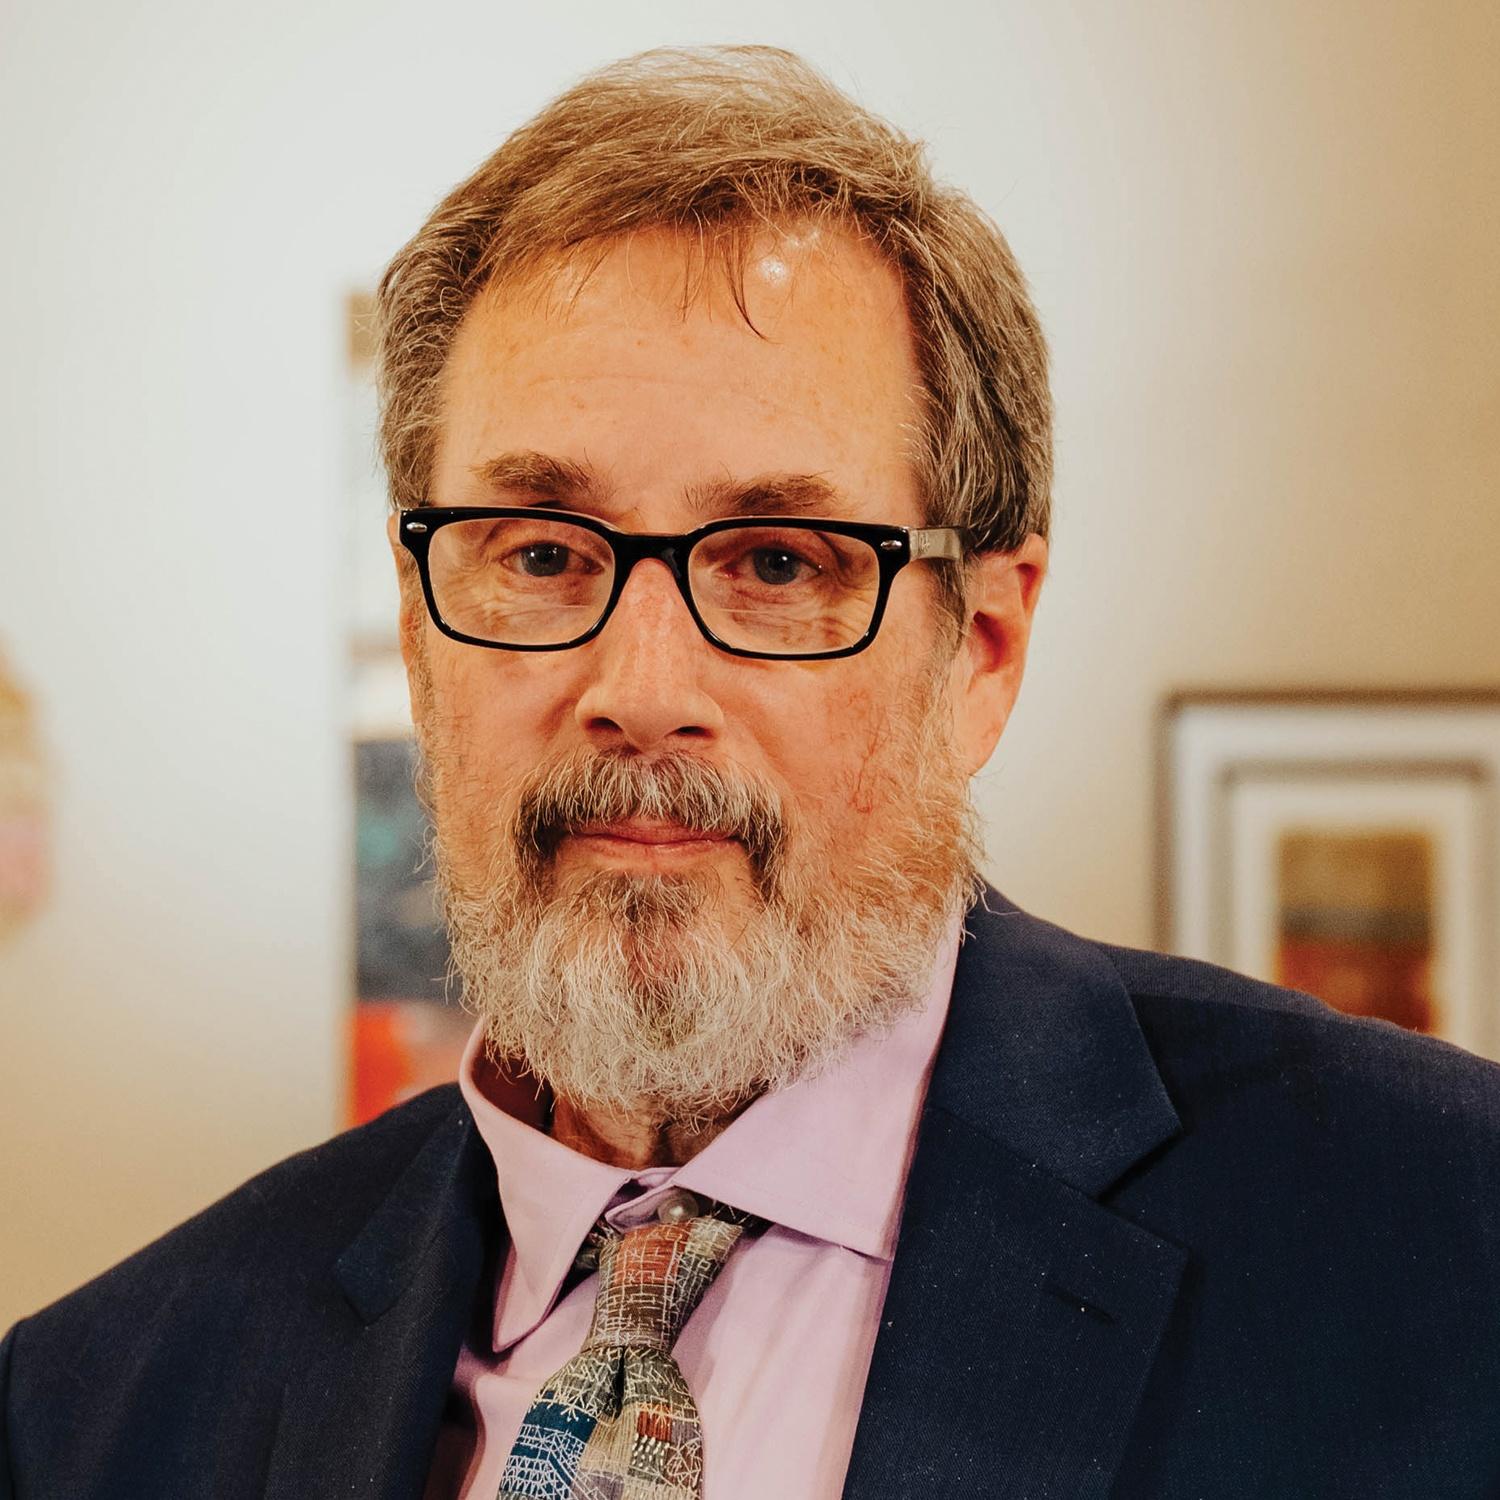 Bill Mullane, chair of the Trumbull Art Gallery’s board of directors